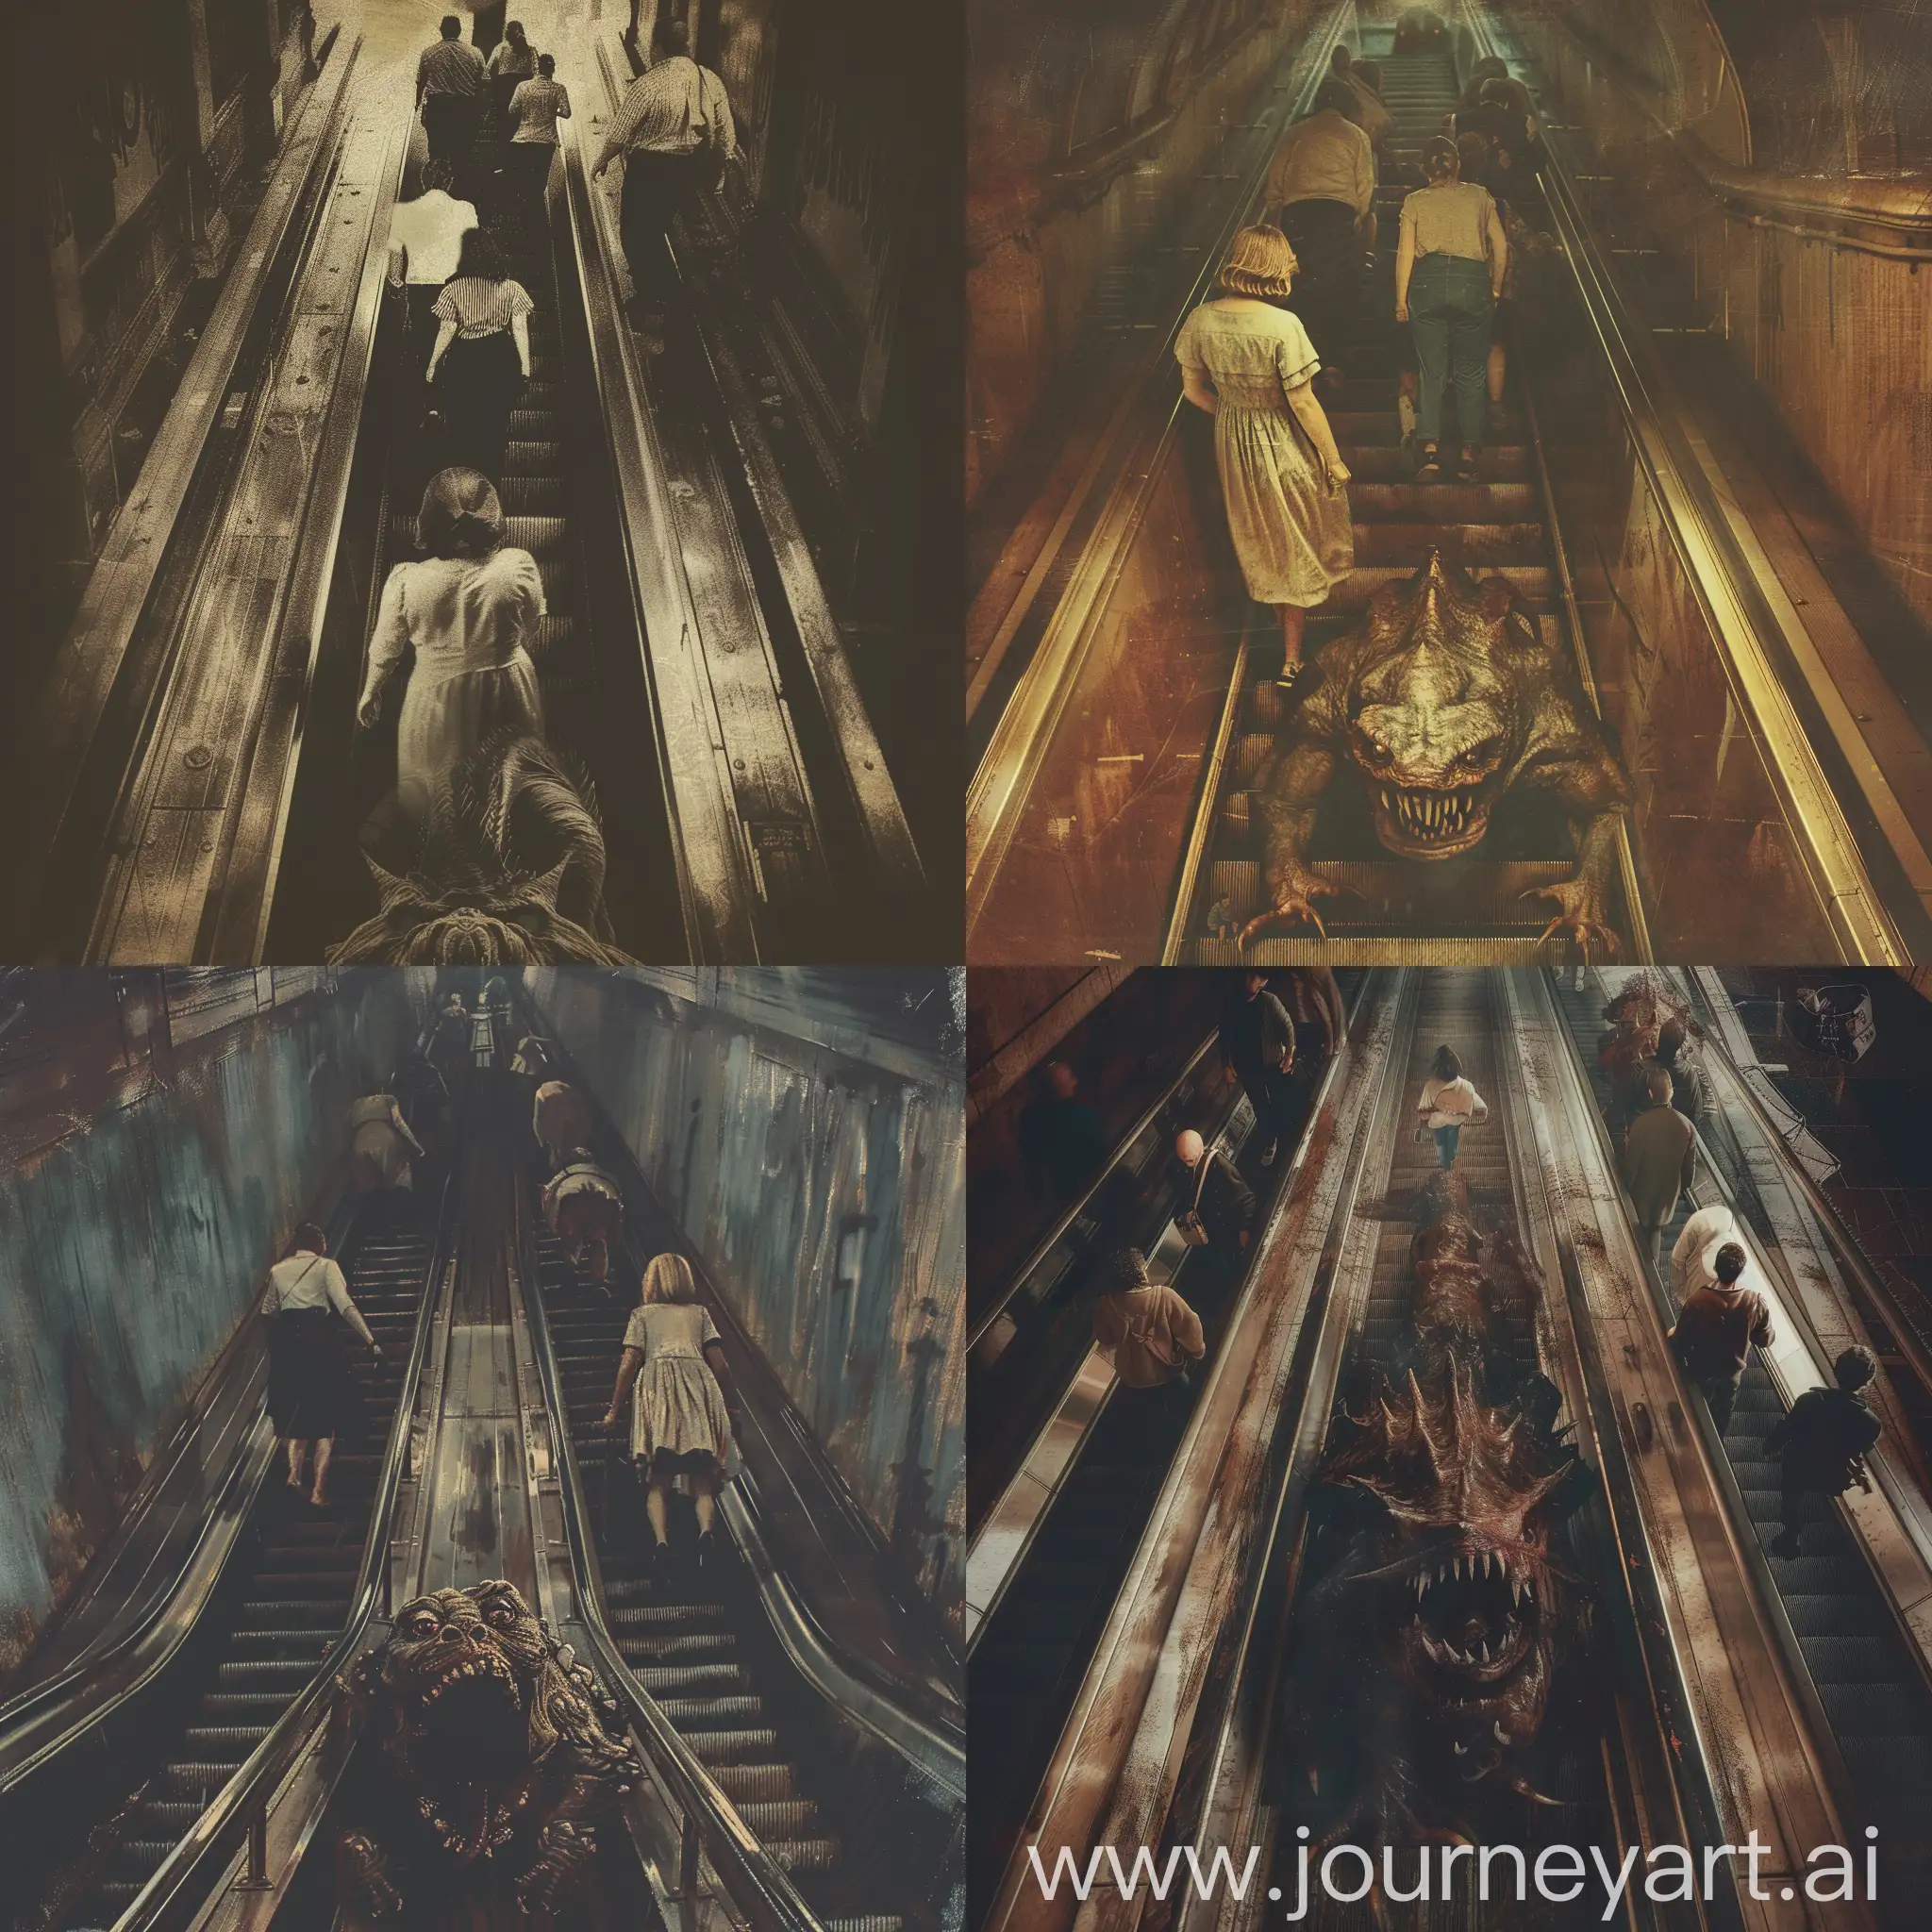 Subway-Passengers-Descending-on-Vintage-Wooden-Escalator-Encountering-a-Gothic-Monster